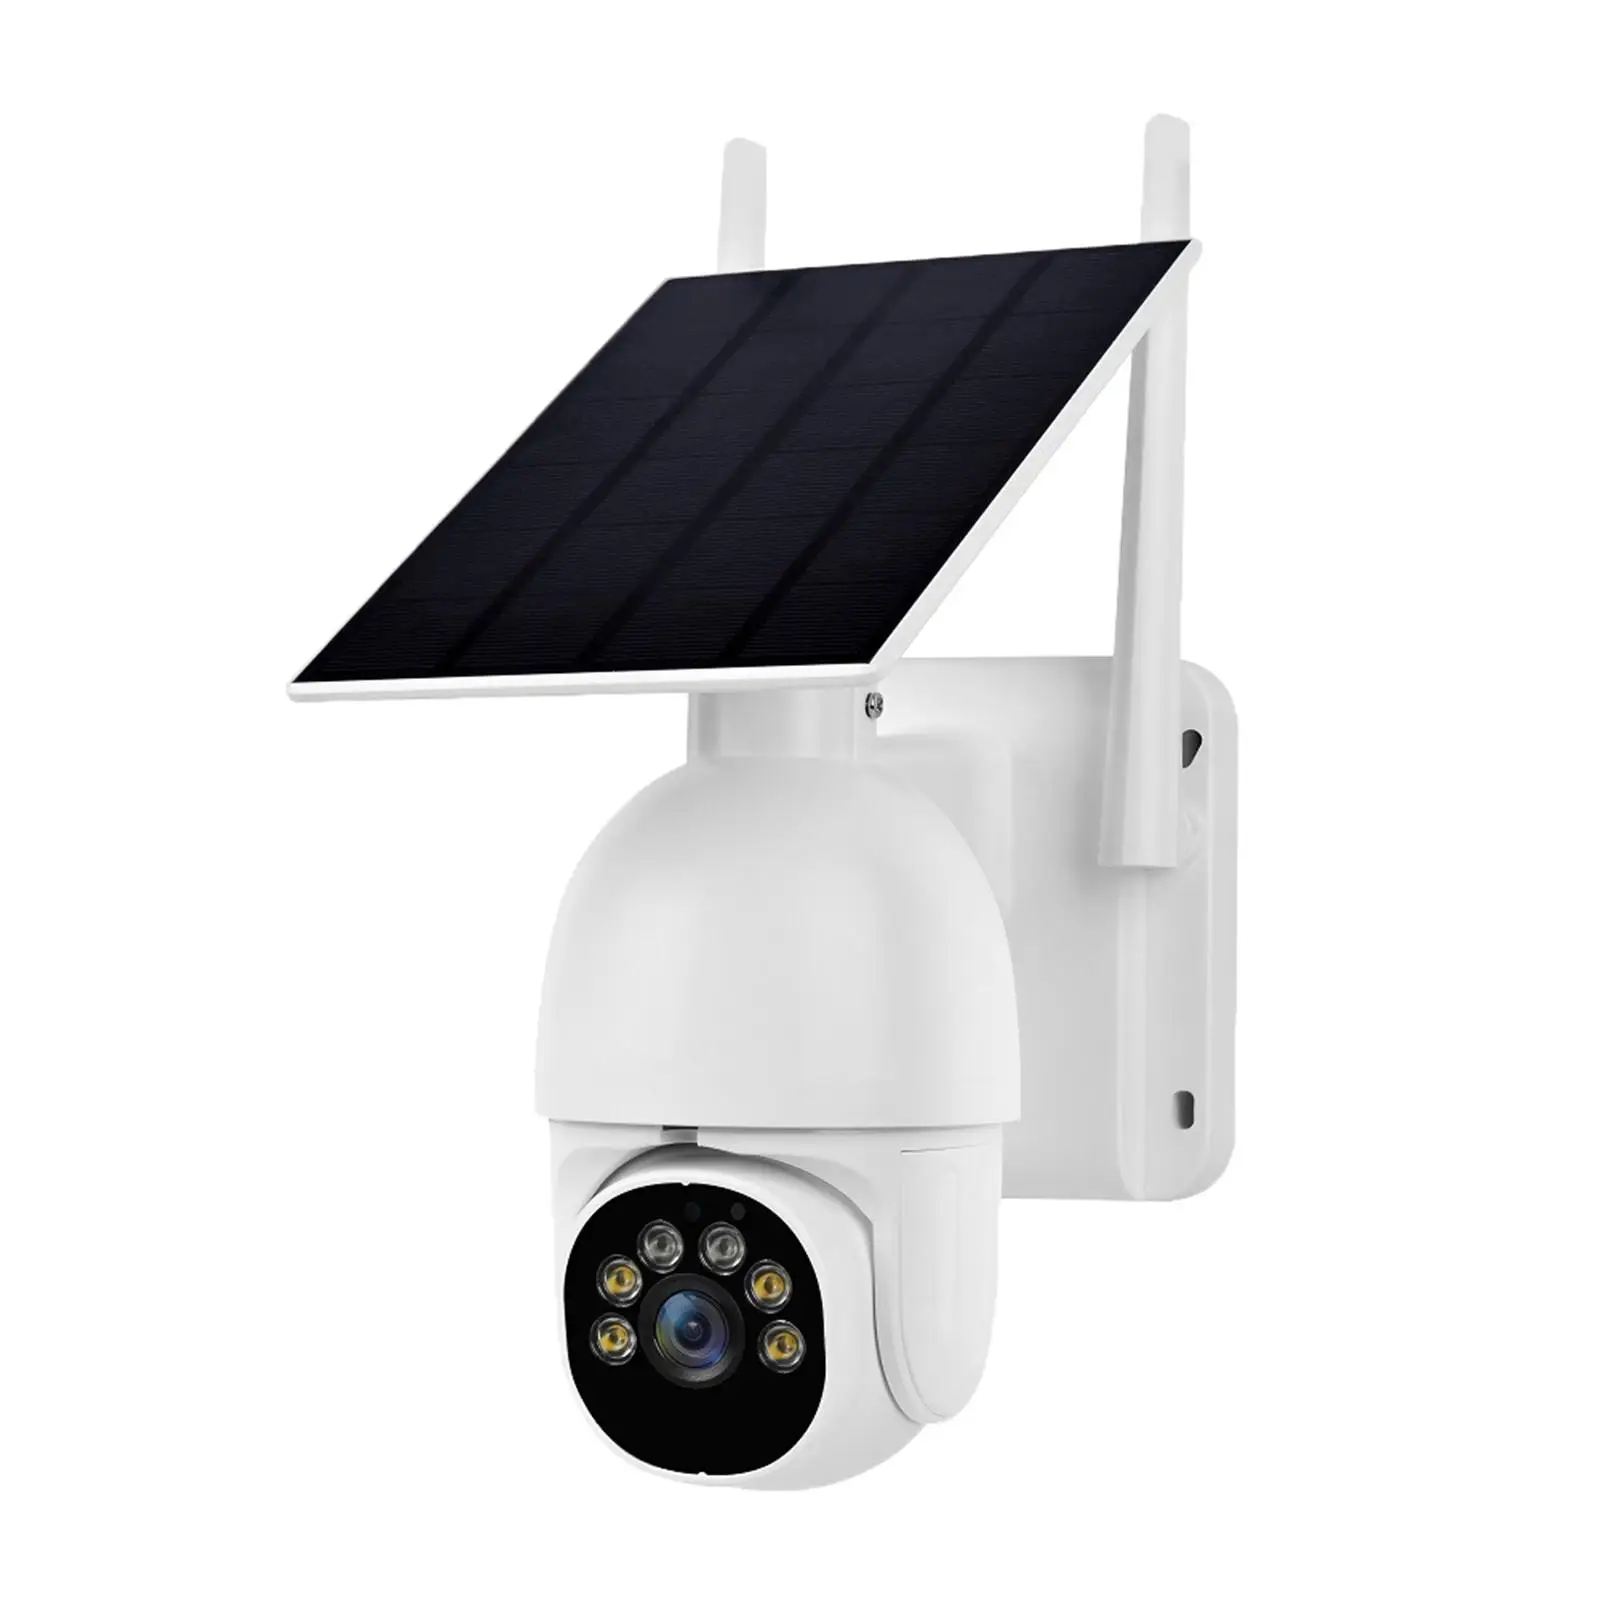 Solar Powered Security Camera Outdoor Color Night Vision Pan Tilt 360° View IP65 Waterproof Cloud/TF Storage Surveillance cam